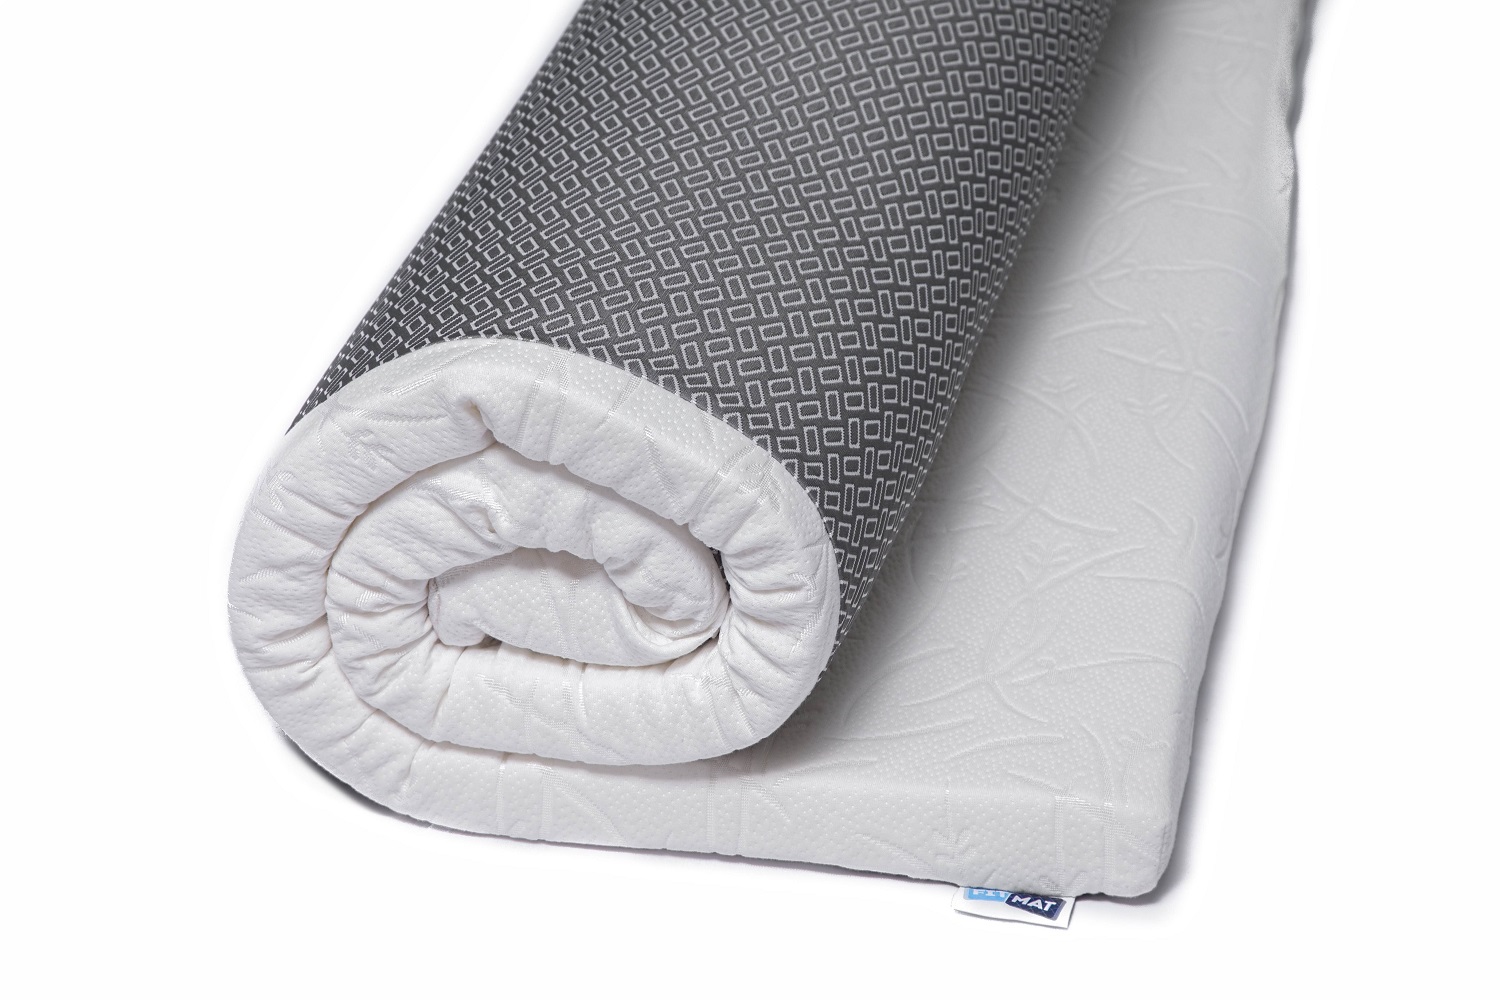 foam mattress topper cover with zipper